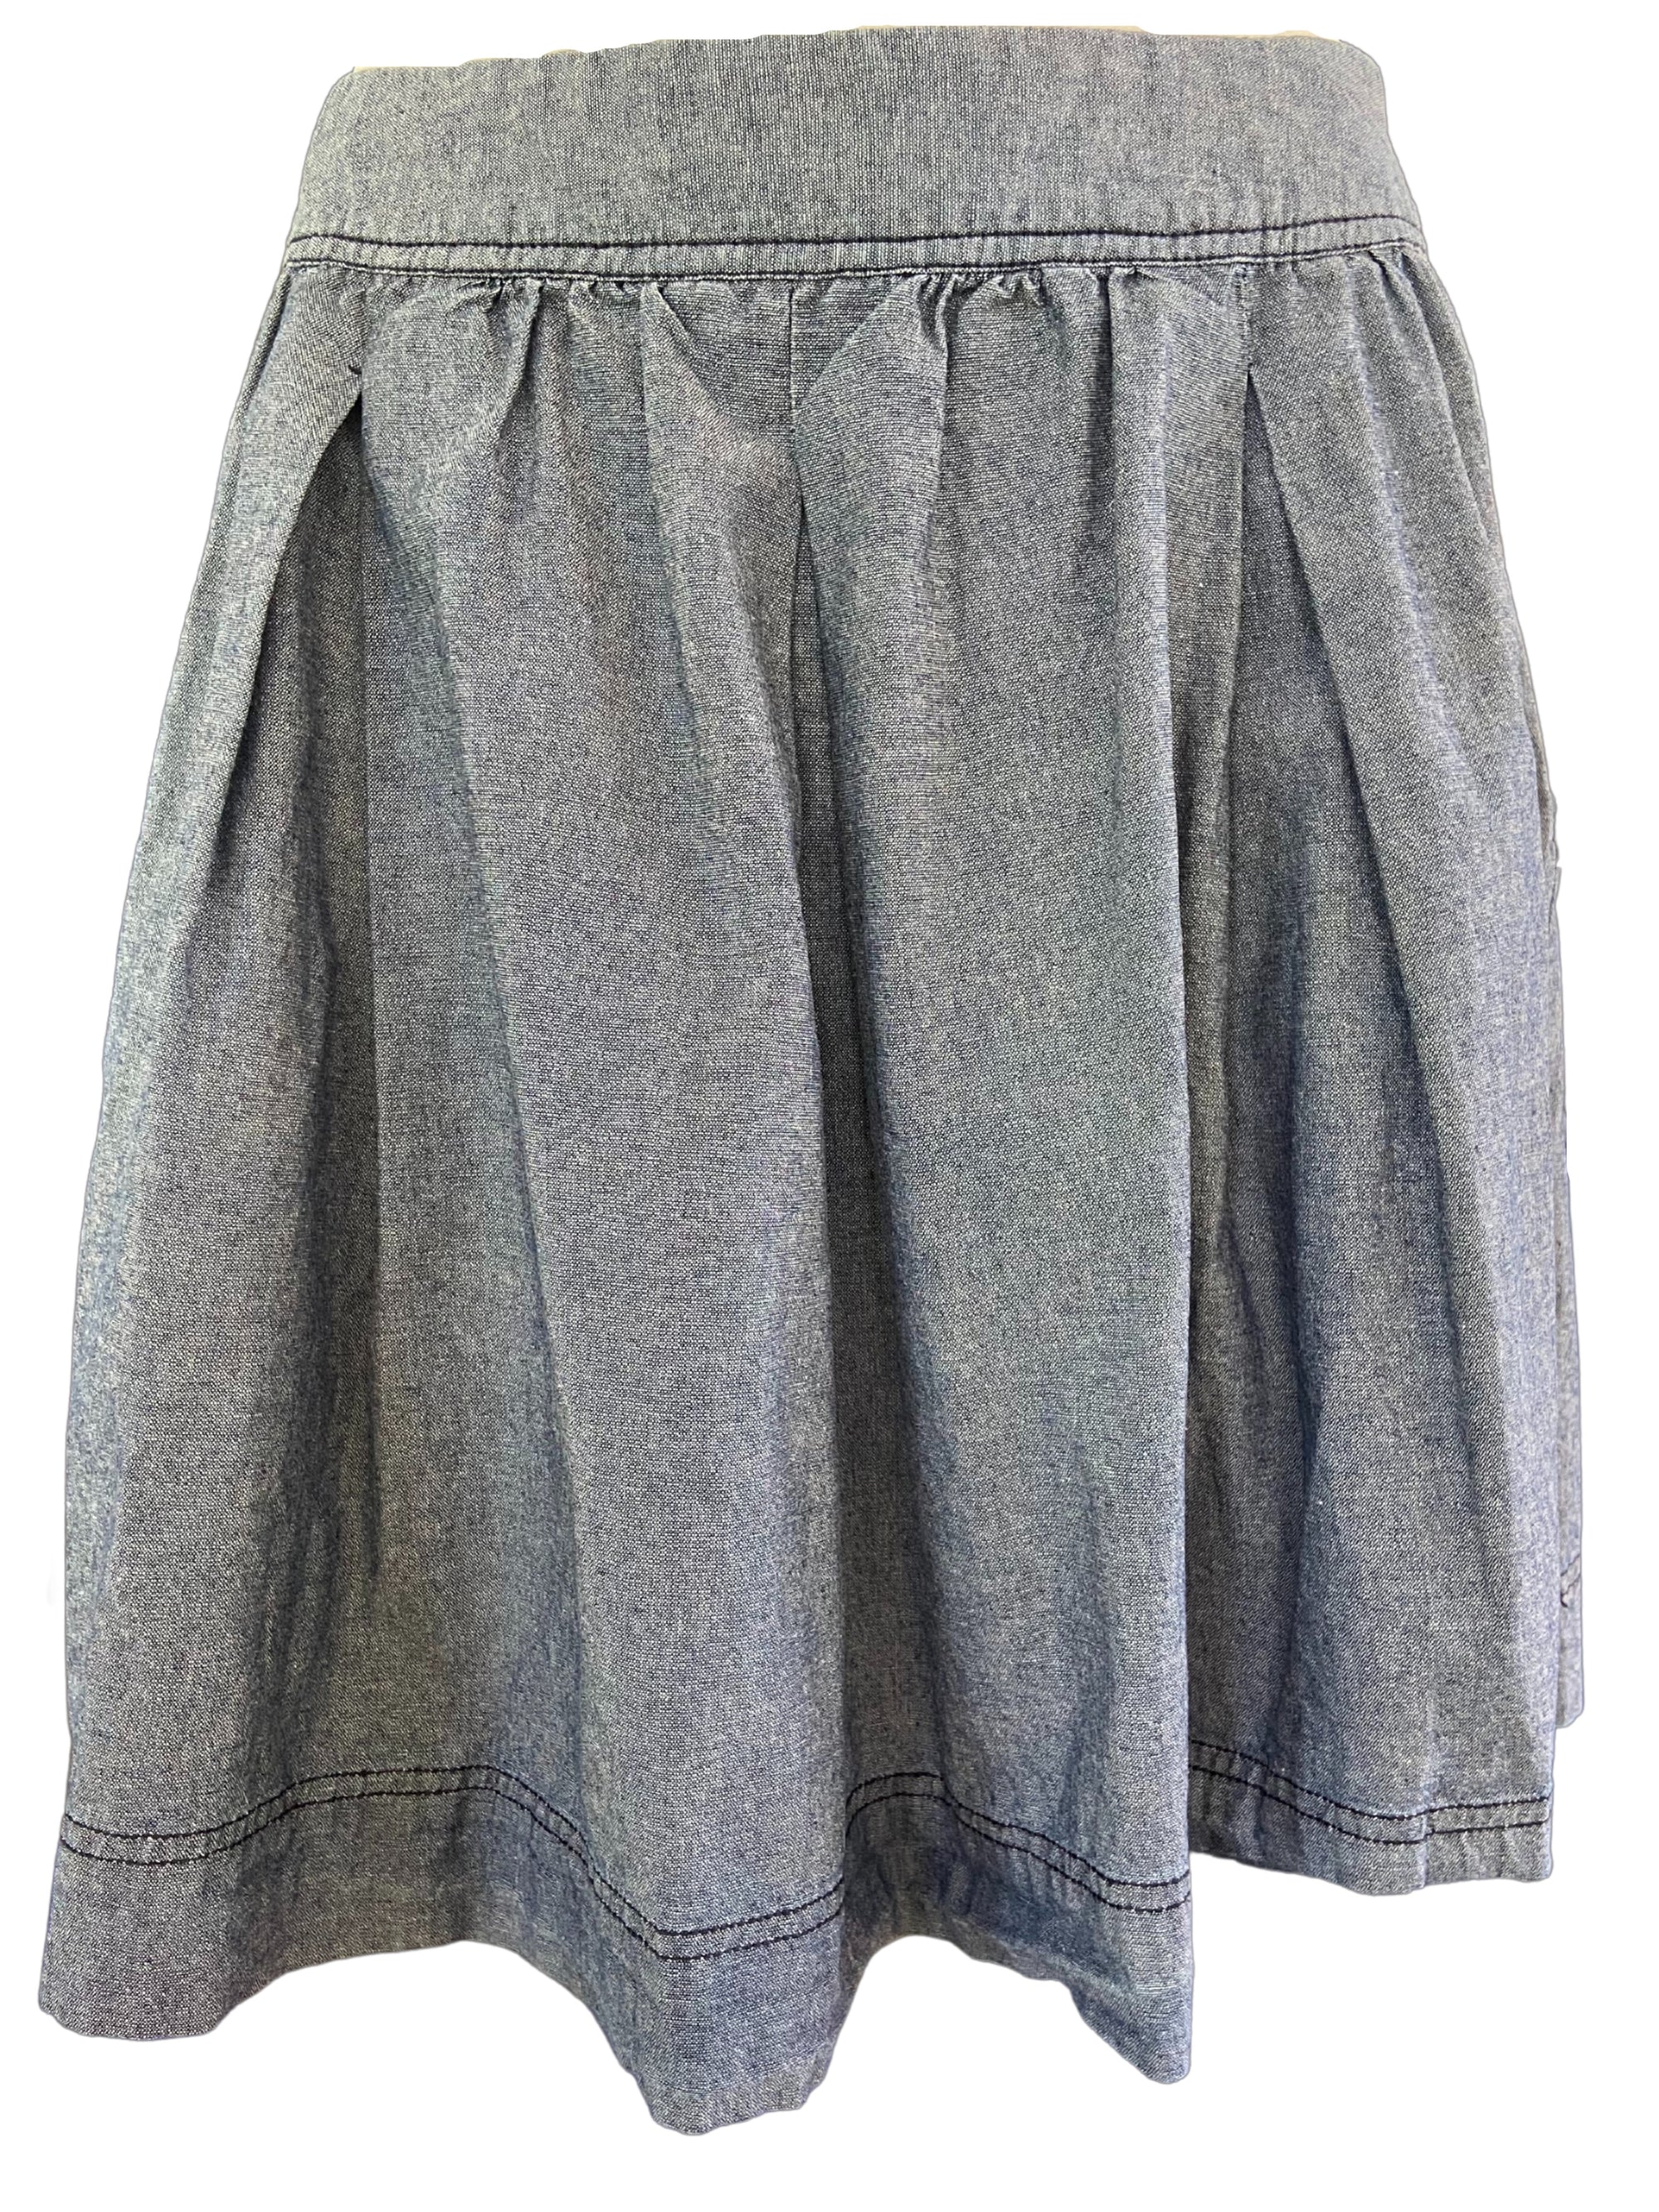 Soft Summer TOMMY HILFIGER chambray mini skirt